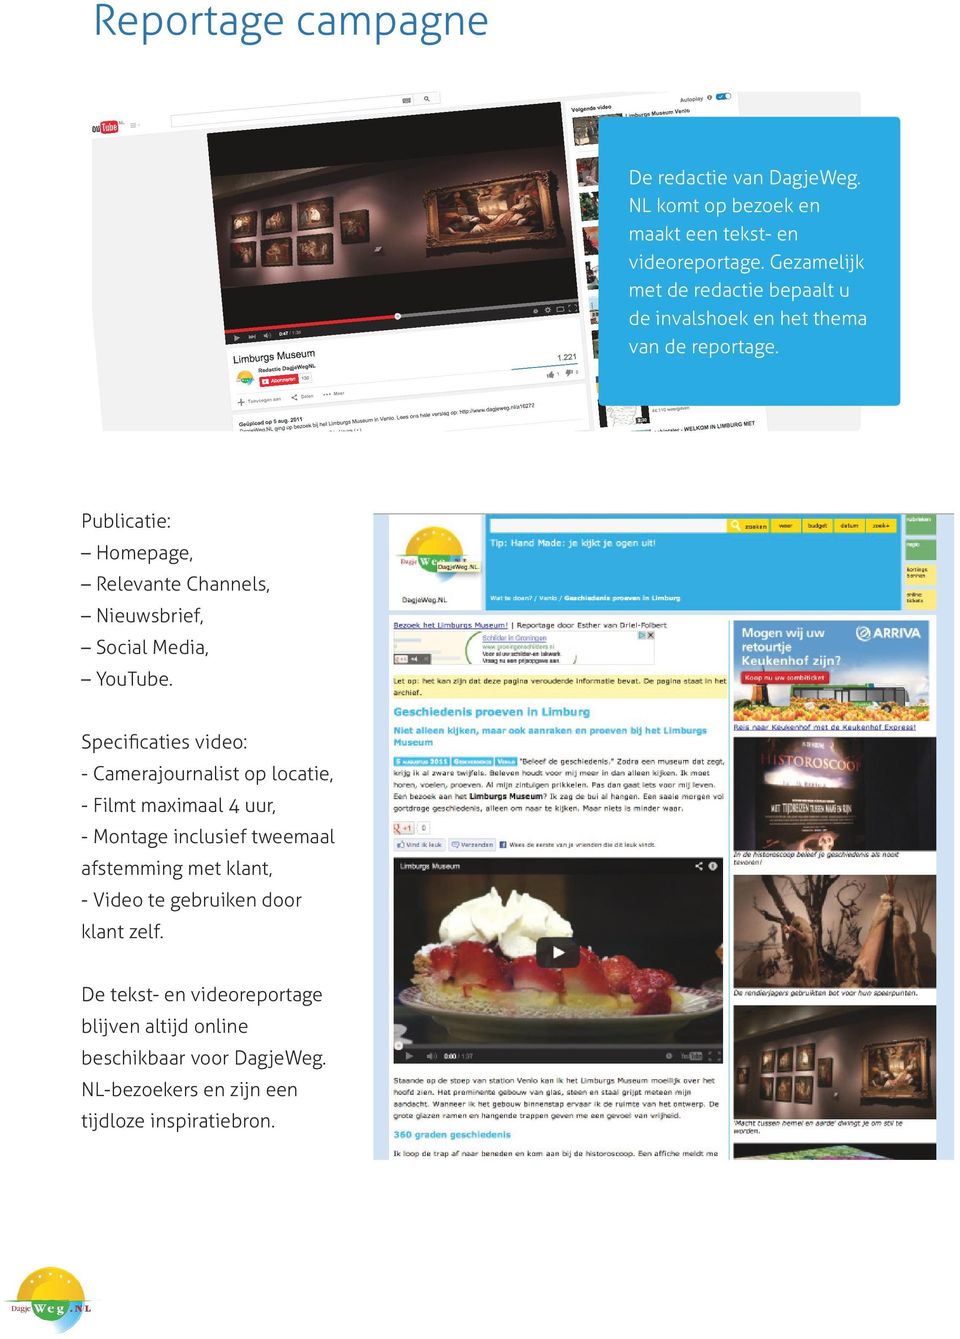 Publicatie: Homepage, Relevante Channels, Nieuwsbrief, Social Media, YouTube.